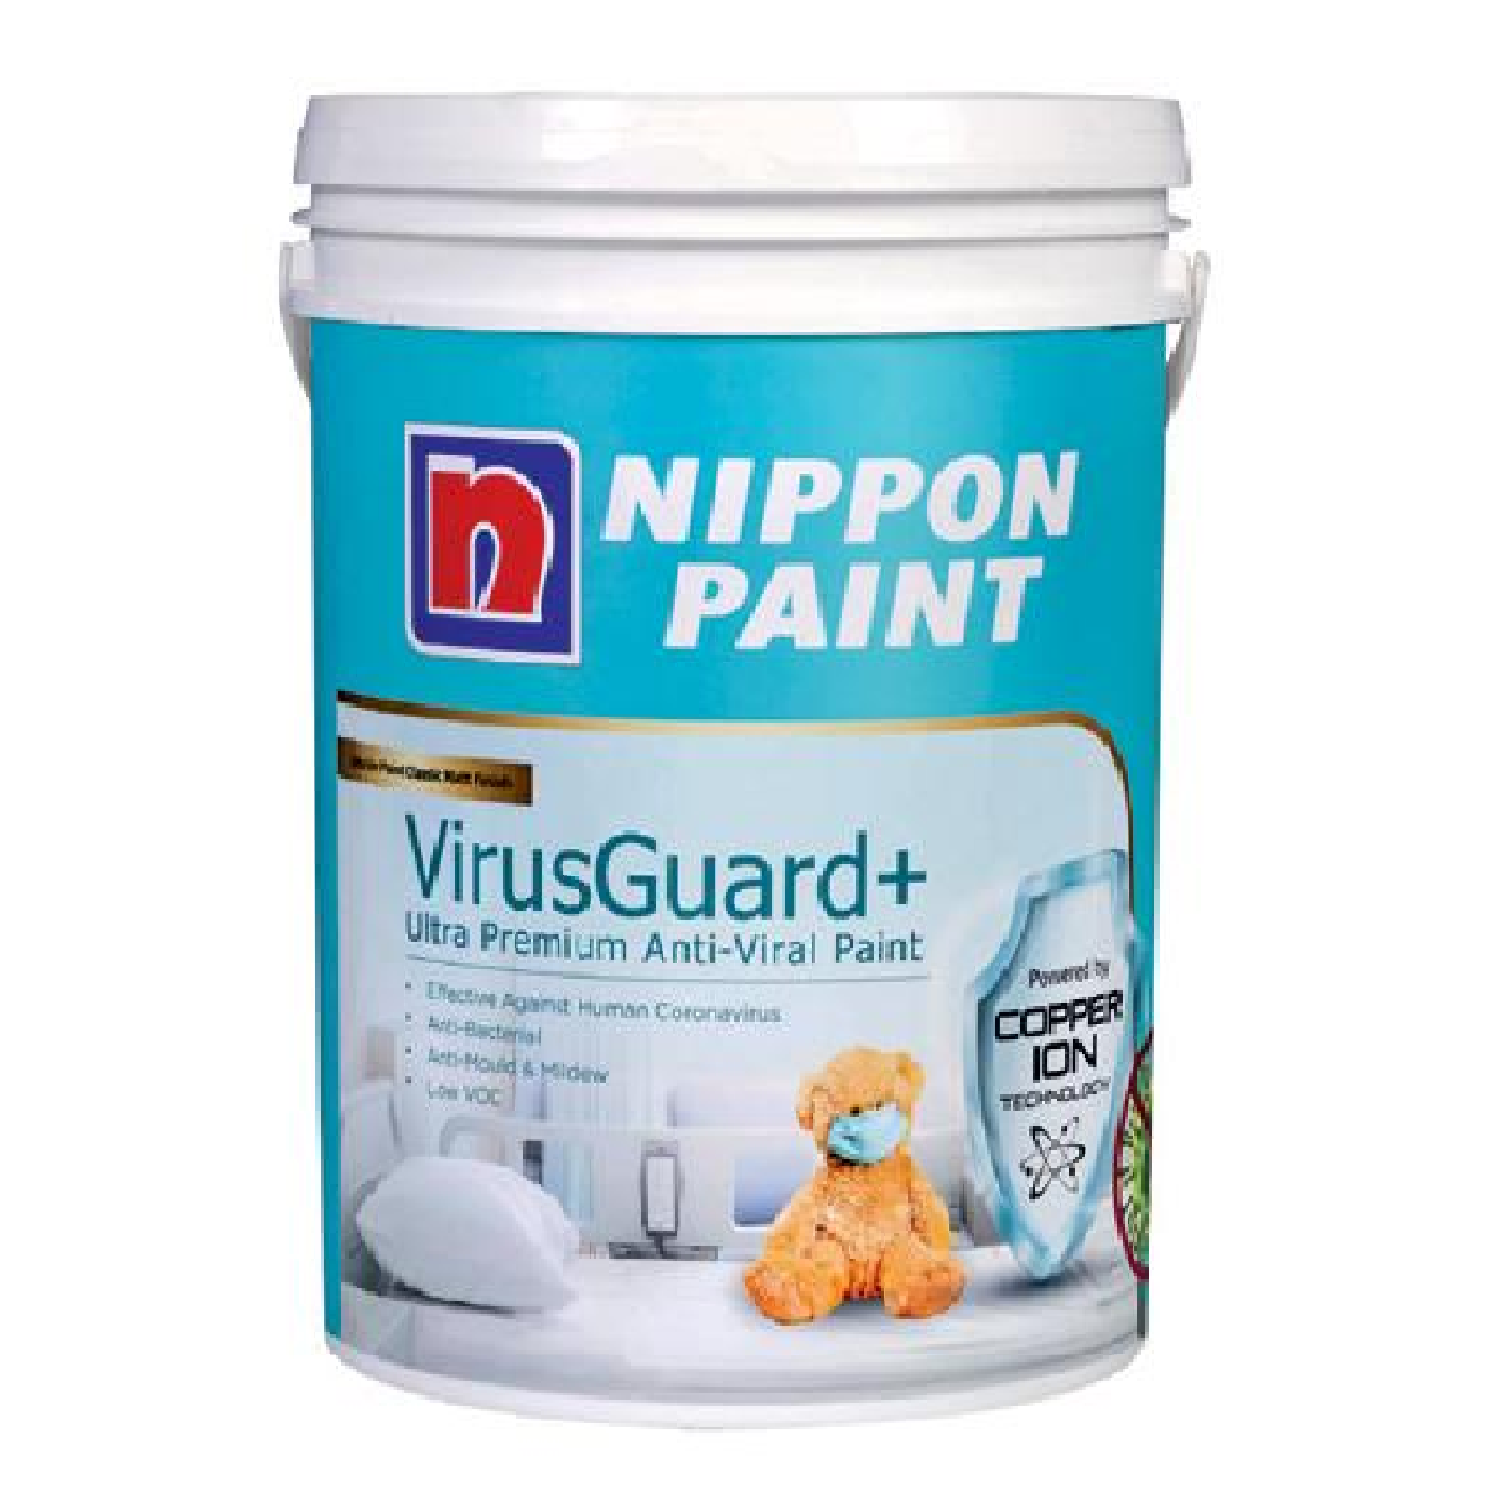 Nippon Paint VirusGuard+ Anti Viral Interior Paint 5L